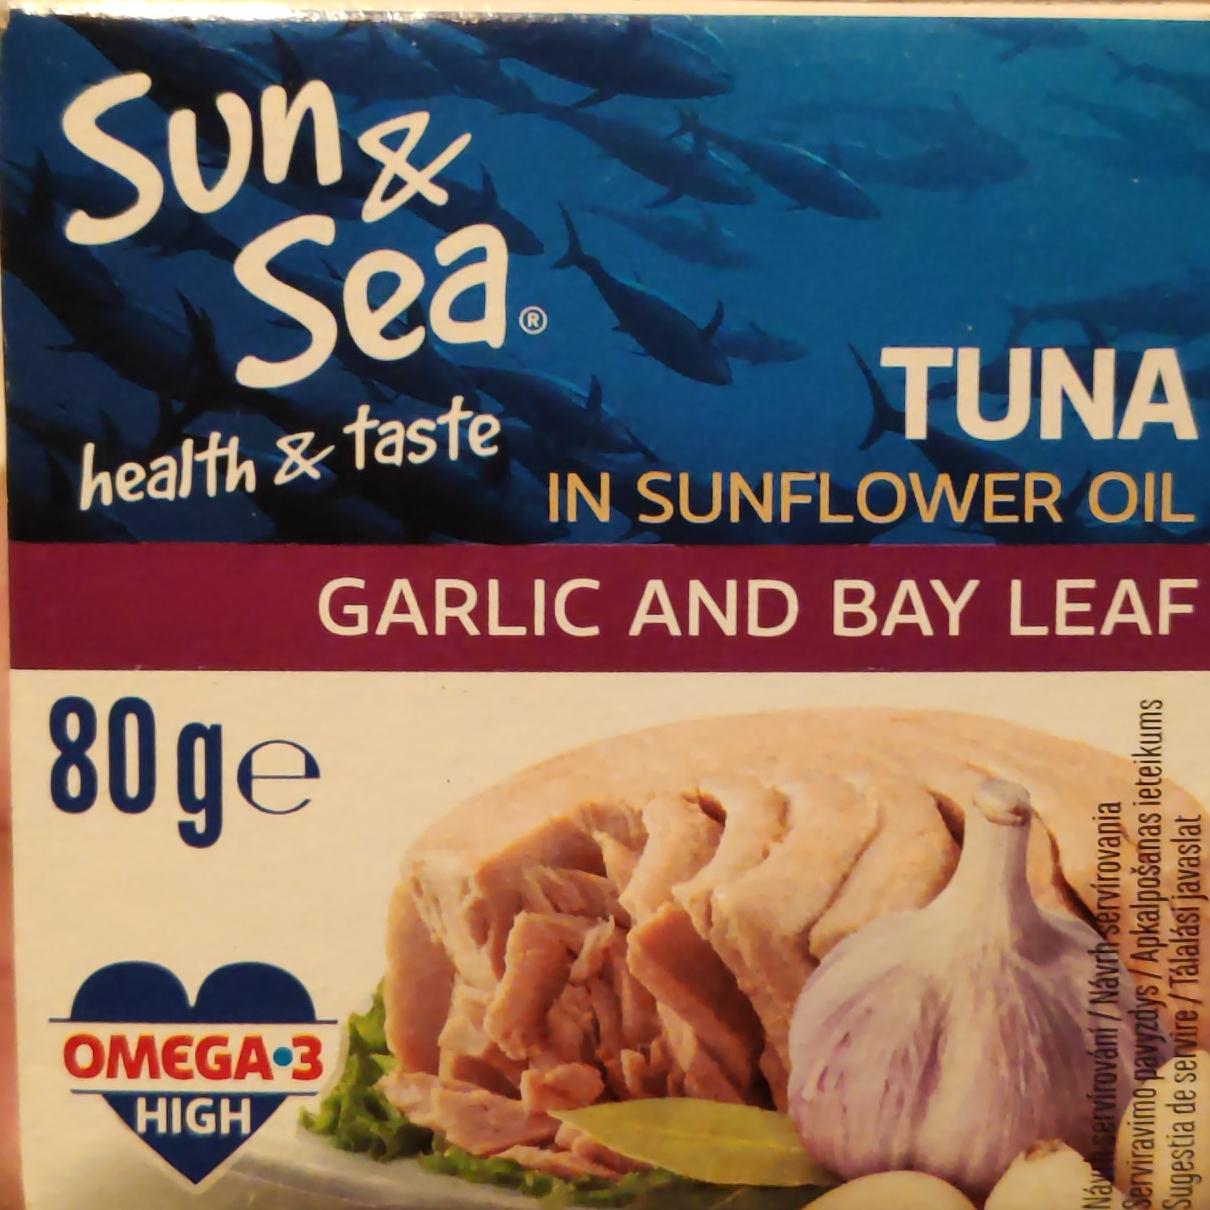 Fotografie - Tuna in sunflower oil garlic and bay leaf Sun & Sea